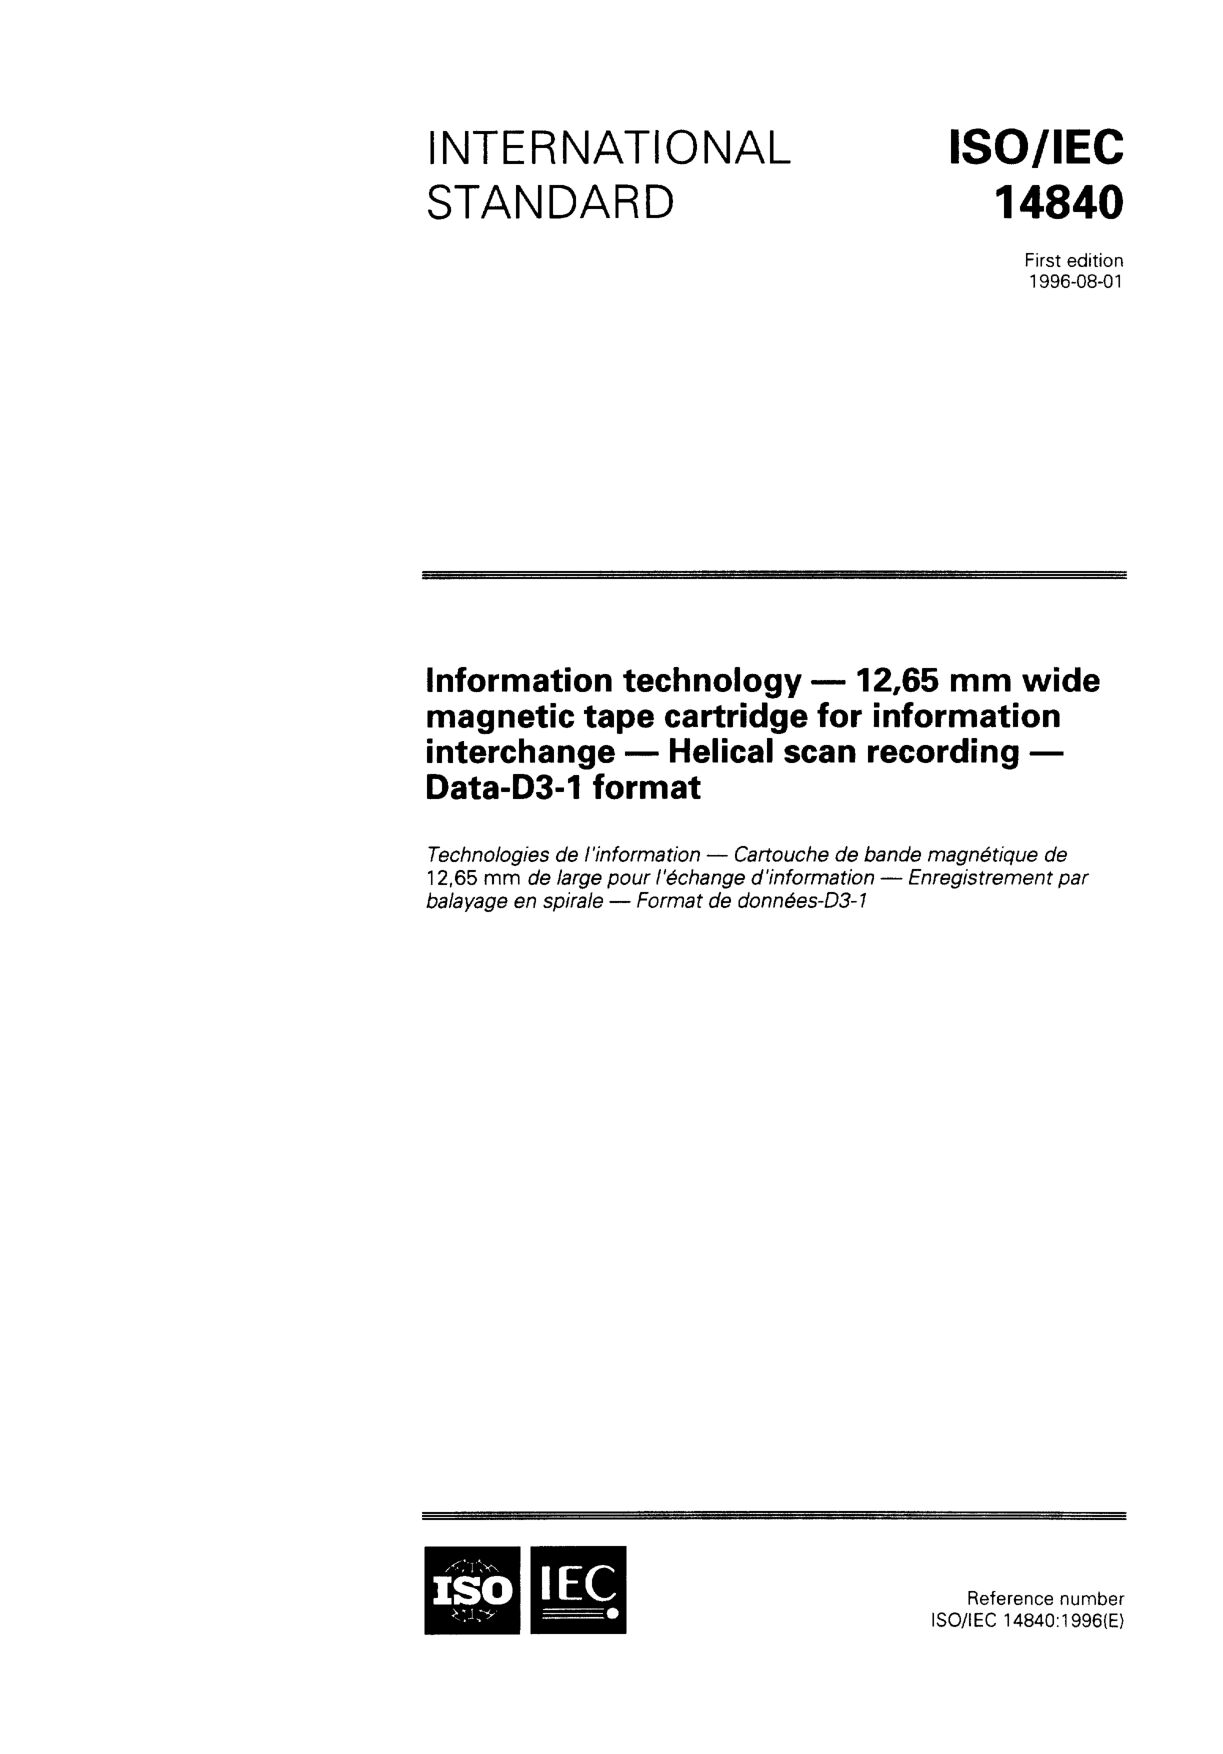 ISO/IEC 14840:1996